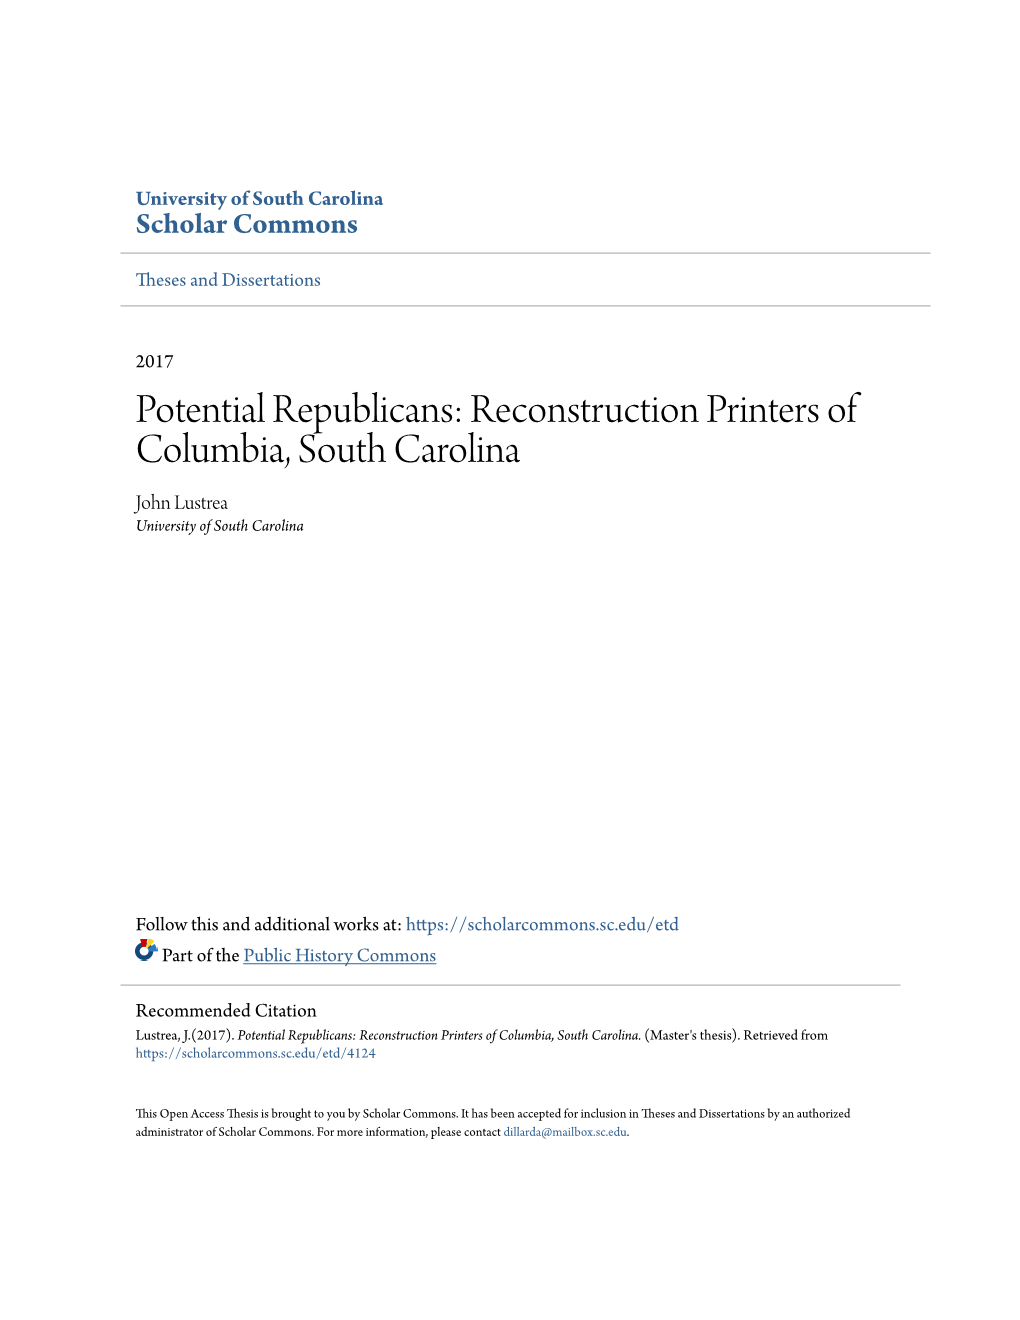 Potential Republicans: Reconstruction Printers of Columbia, South Carolina John Lustrea University of South Carolina